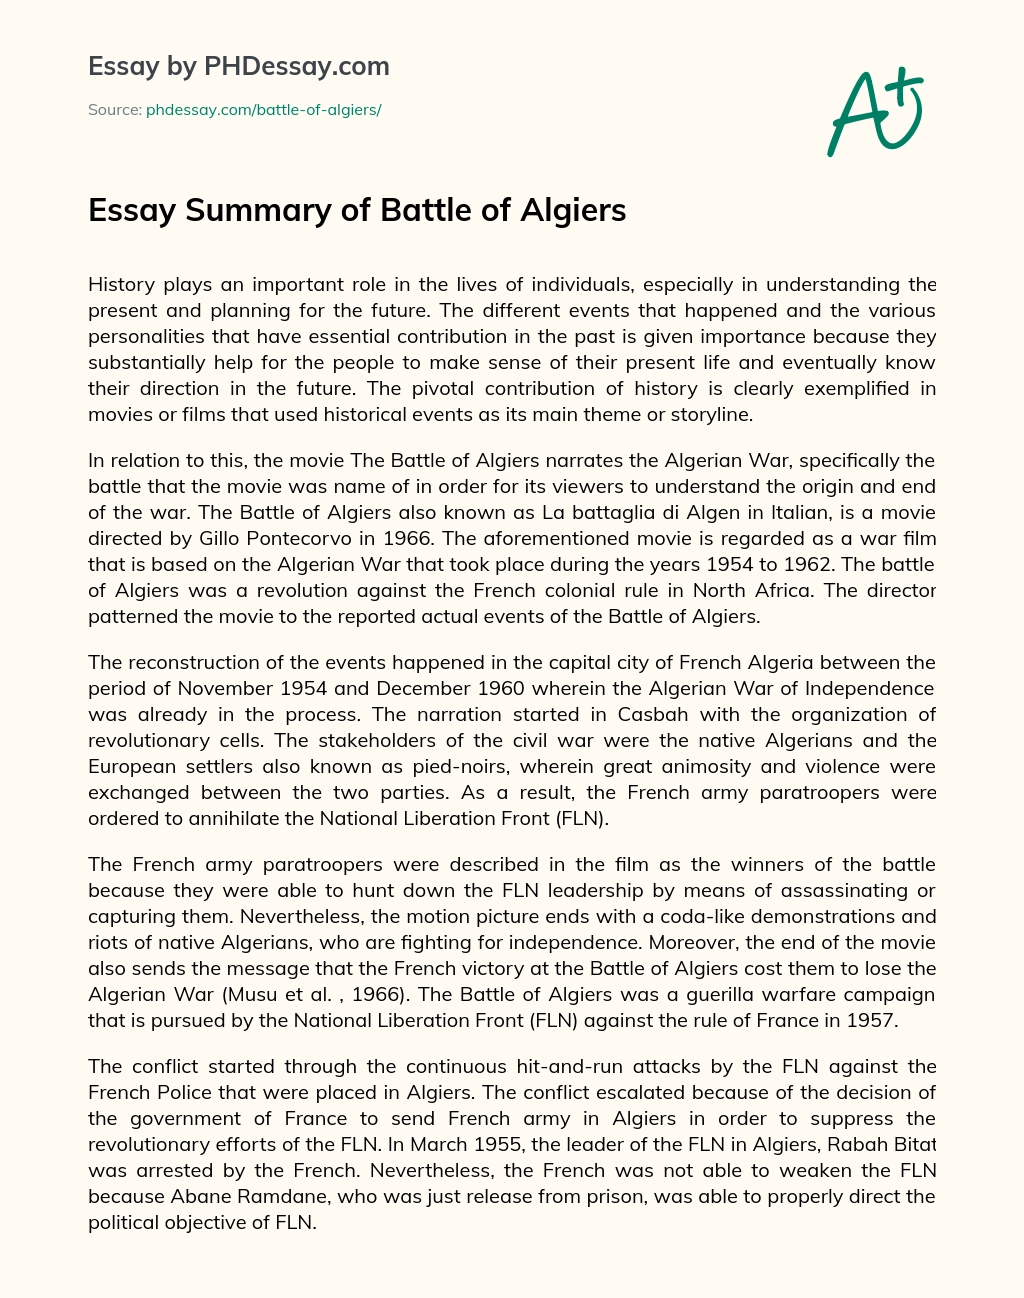 Essay Summary of Battle of Algiers essay